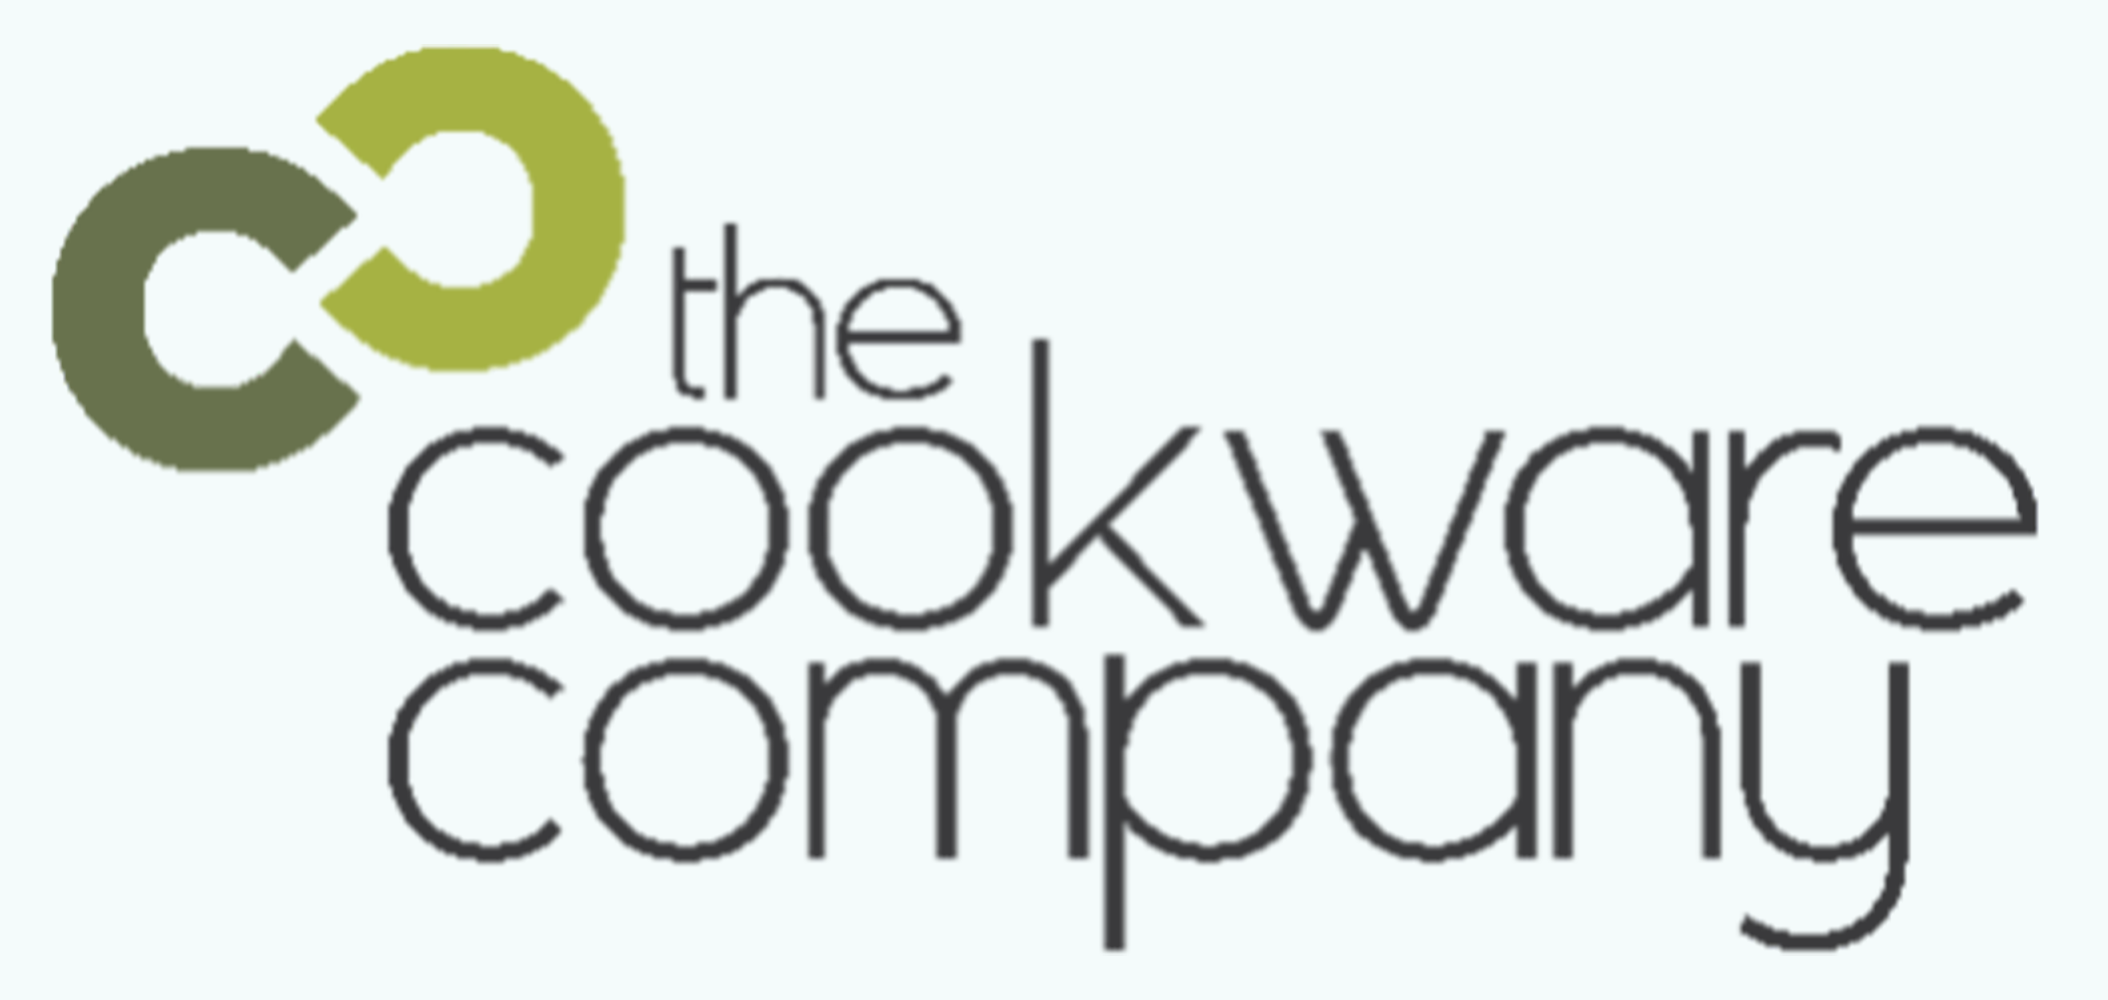 Laadpaal Cookware Company